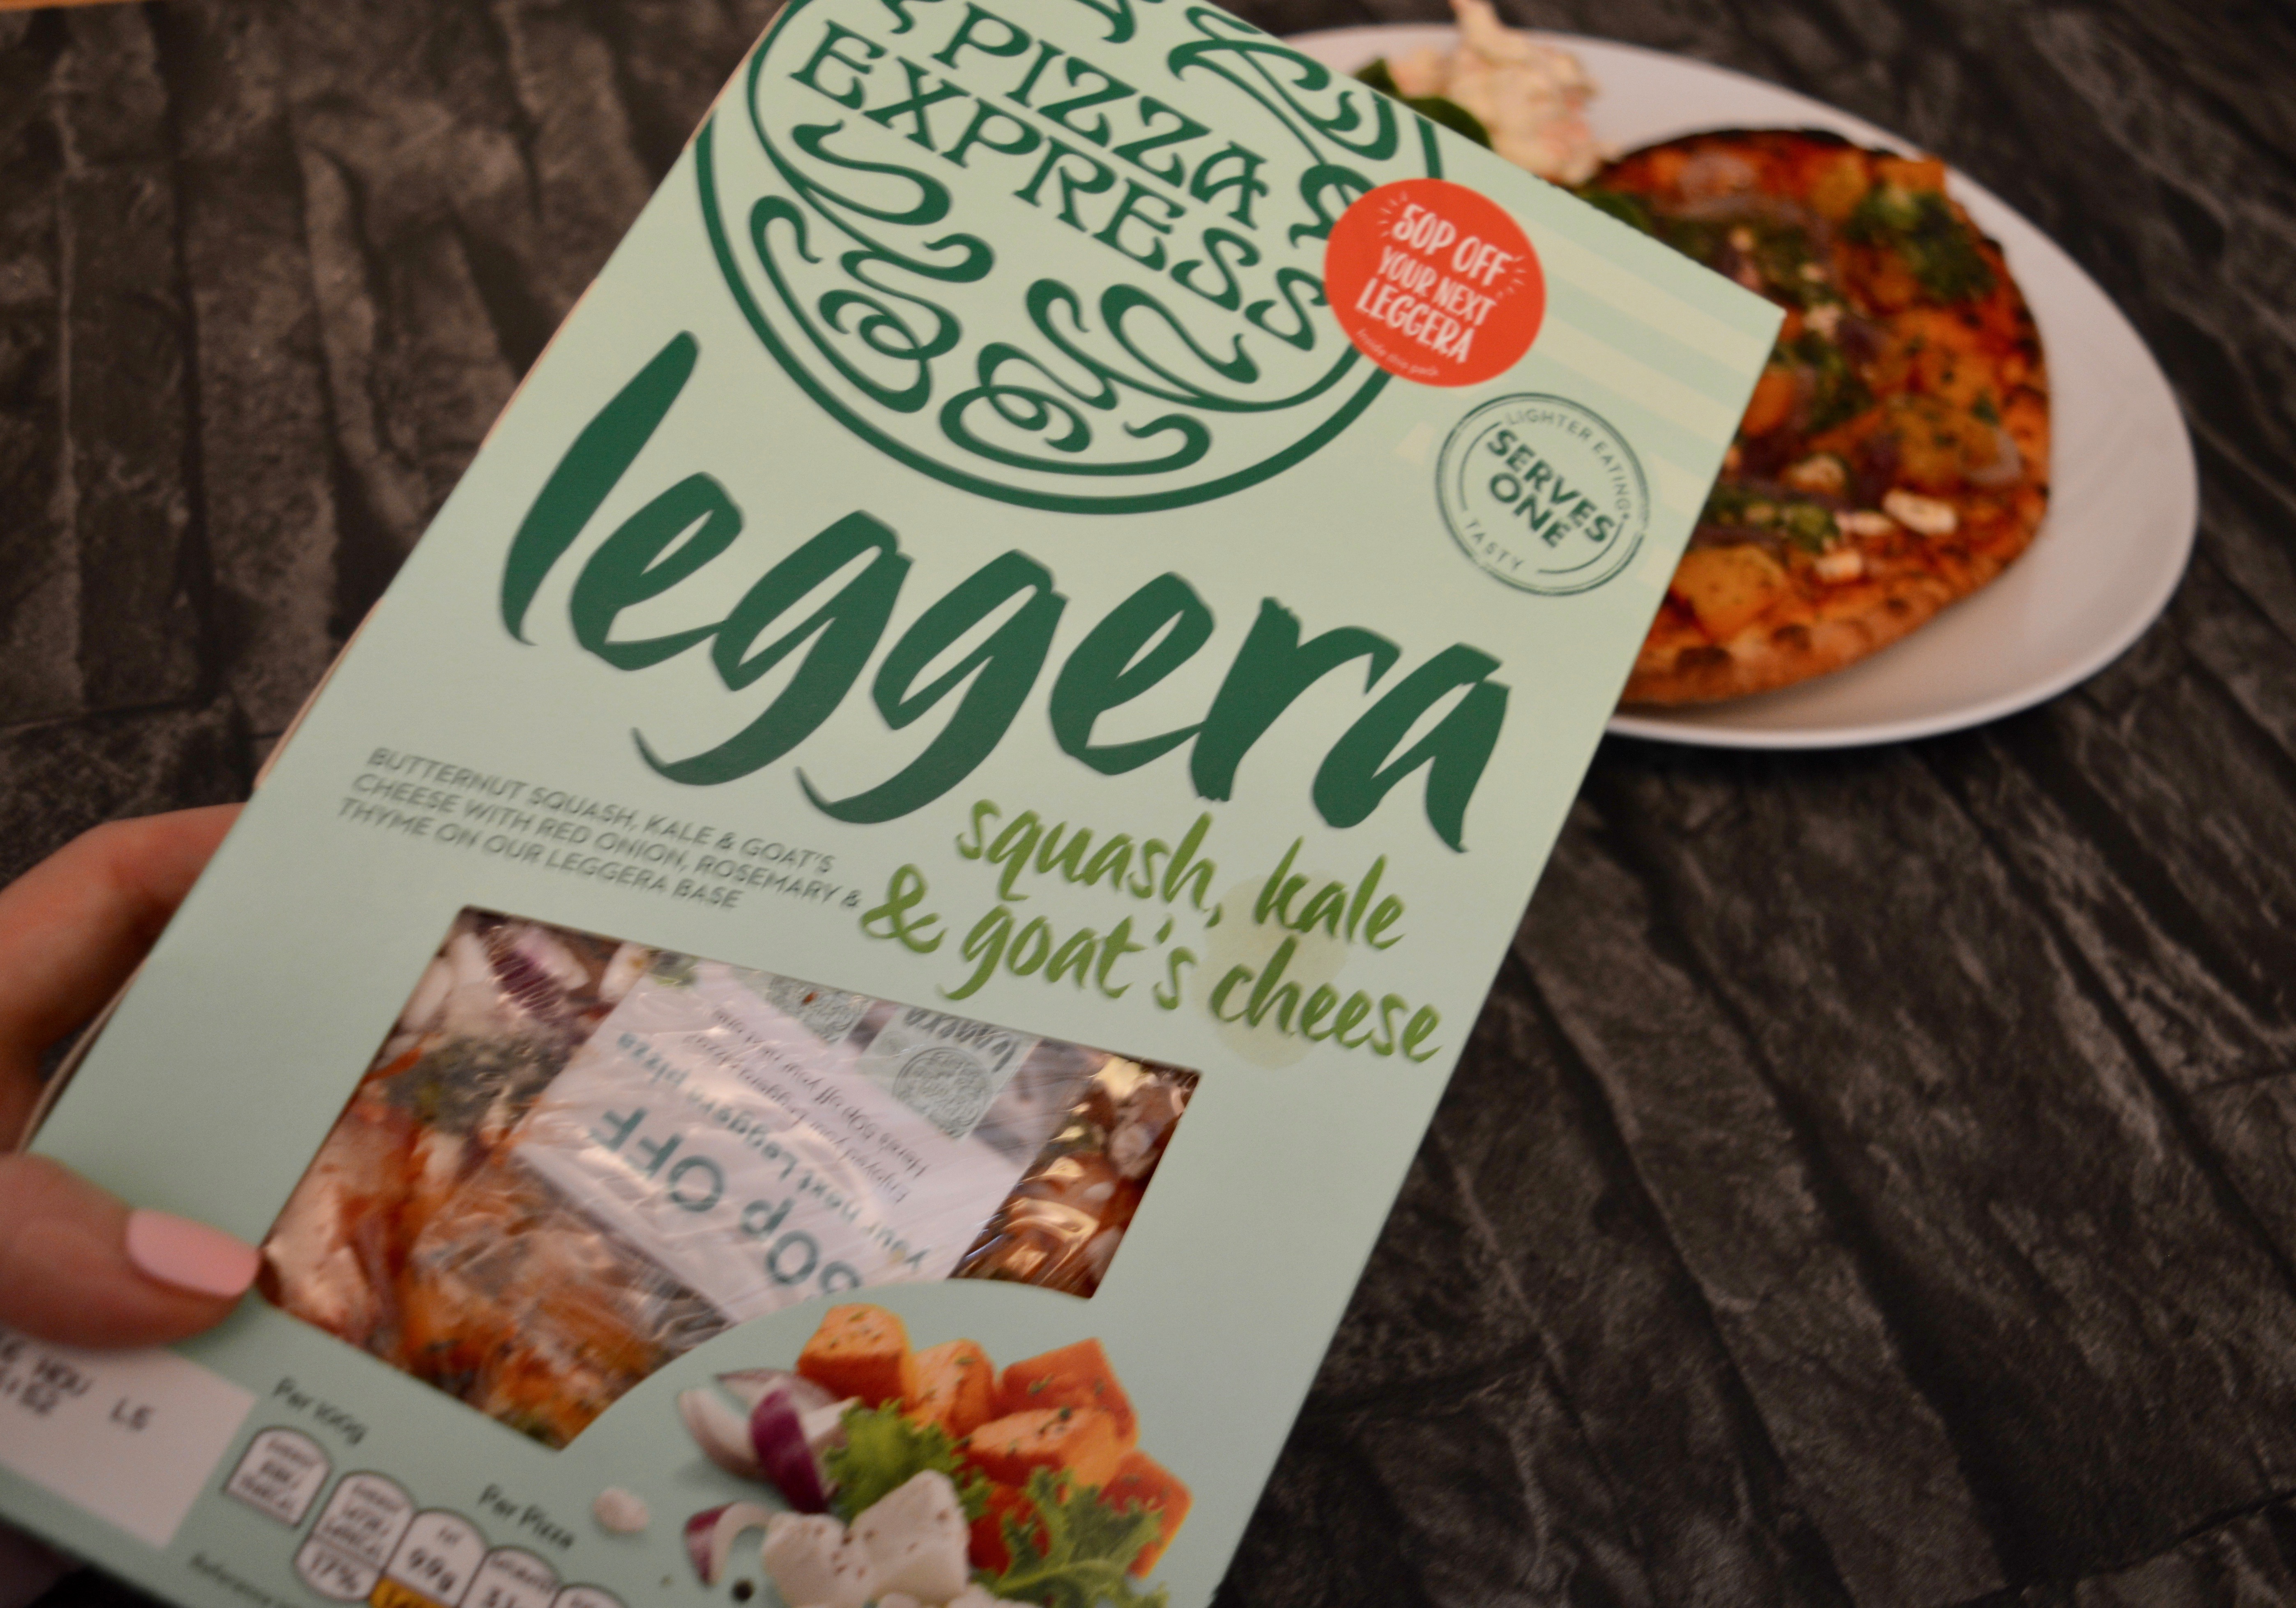 Pizza Express Leggera | Lighter Pizza Base | Healthy Choices | Elle Blonde Luxury Lifestyle Destination Blog